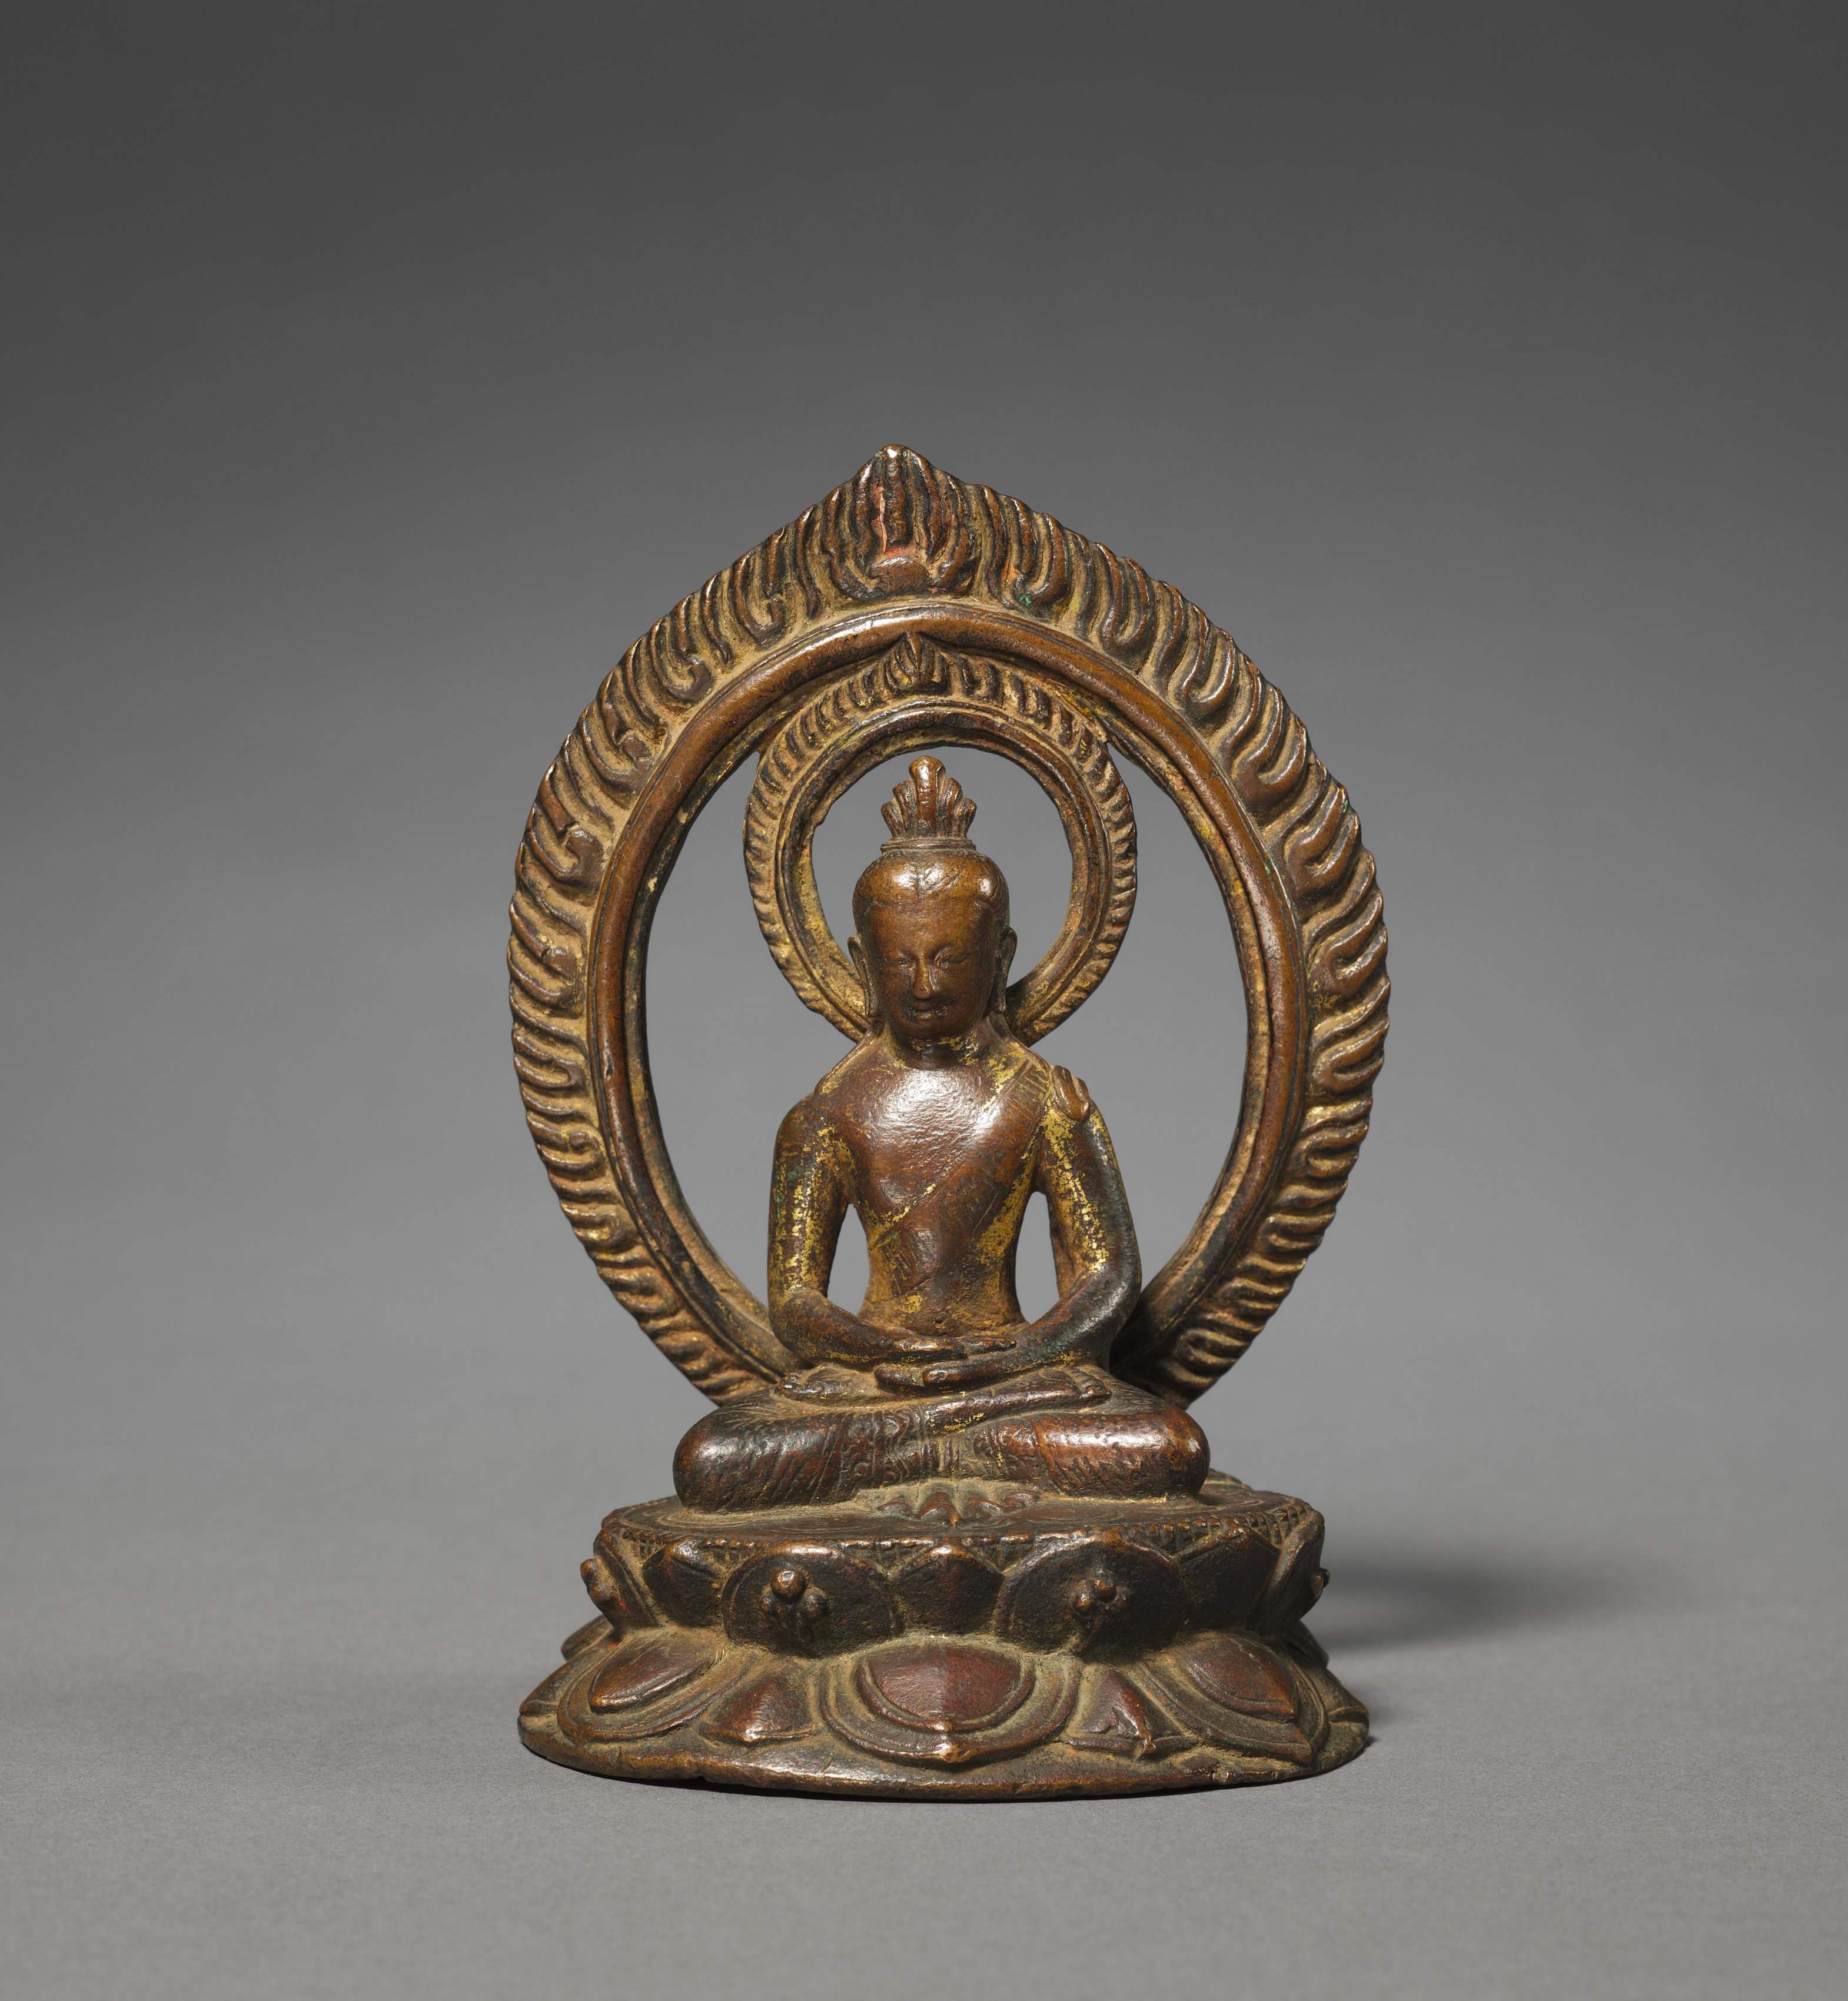 Vak, an Emanation of the Buddha Amitabha